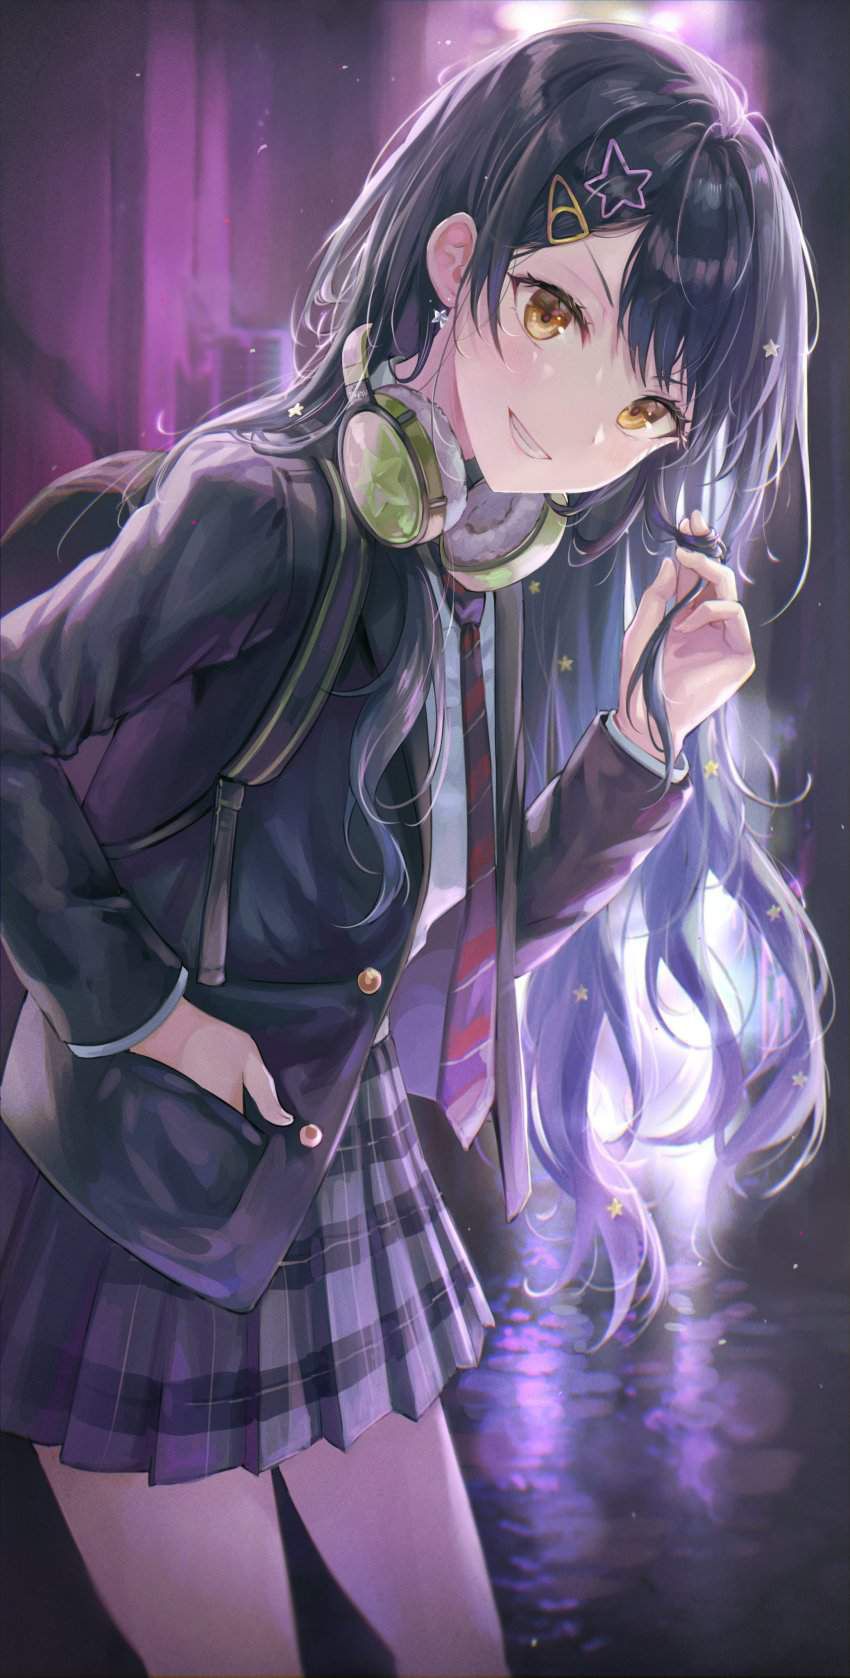 【Vocaloid】Hatsune Miku's cute picture furnace image summary 10